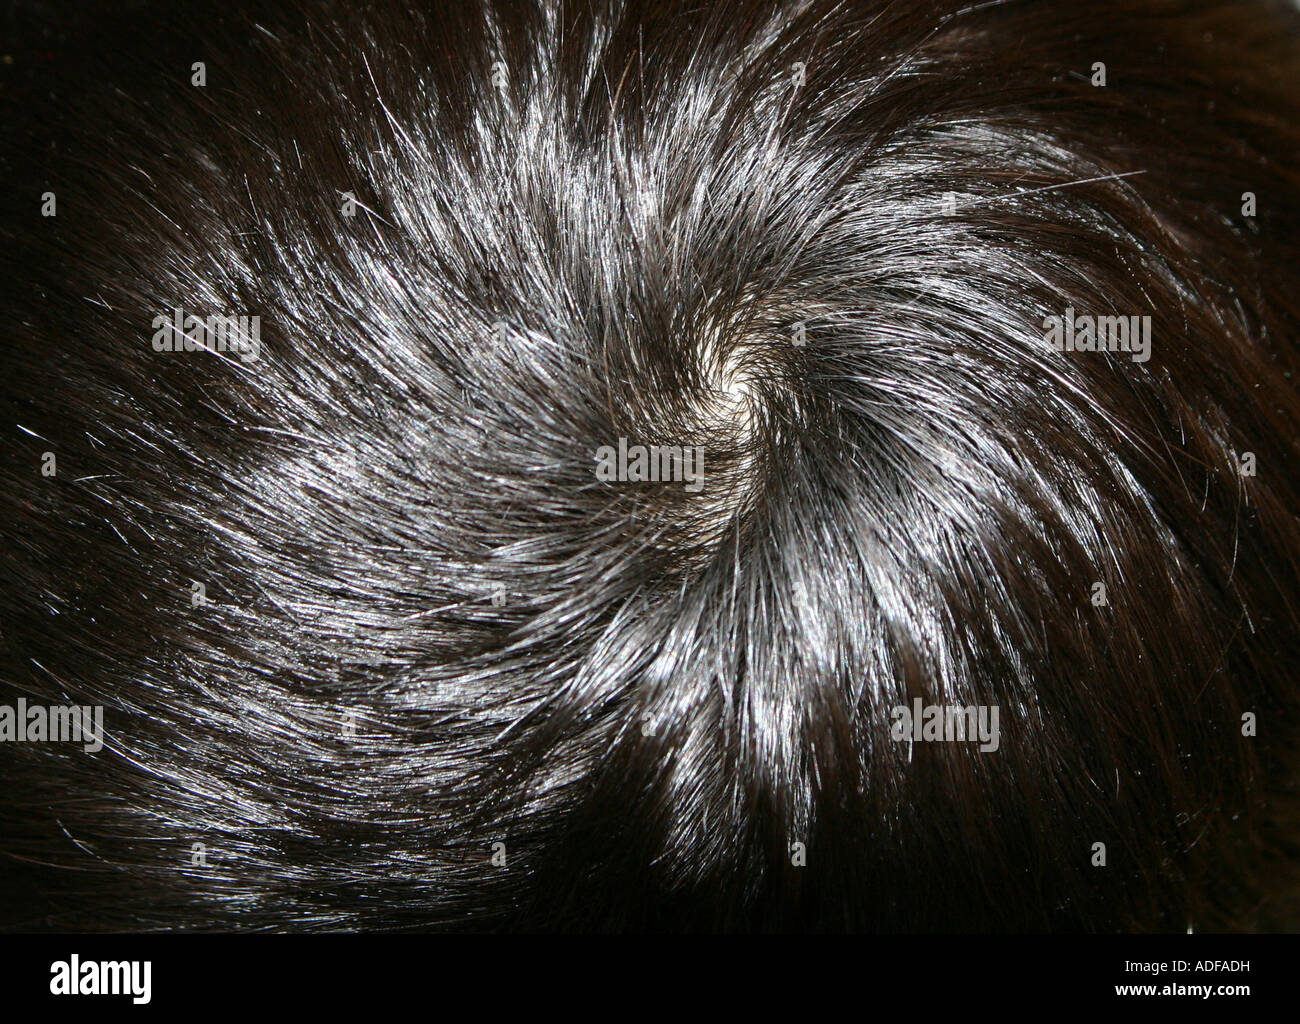 Crown of hair on boys head Stock Photo - Alamy